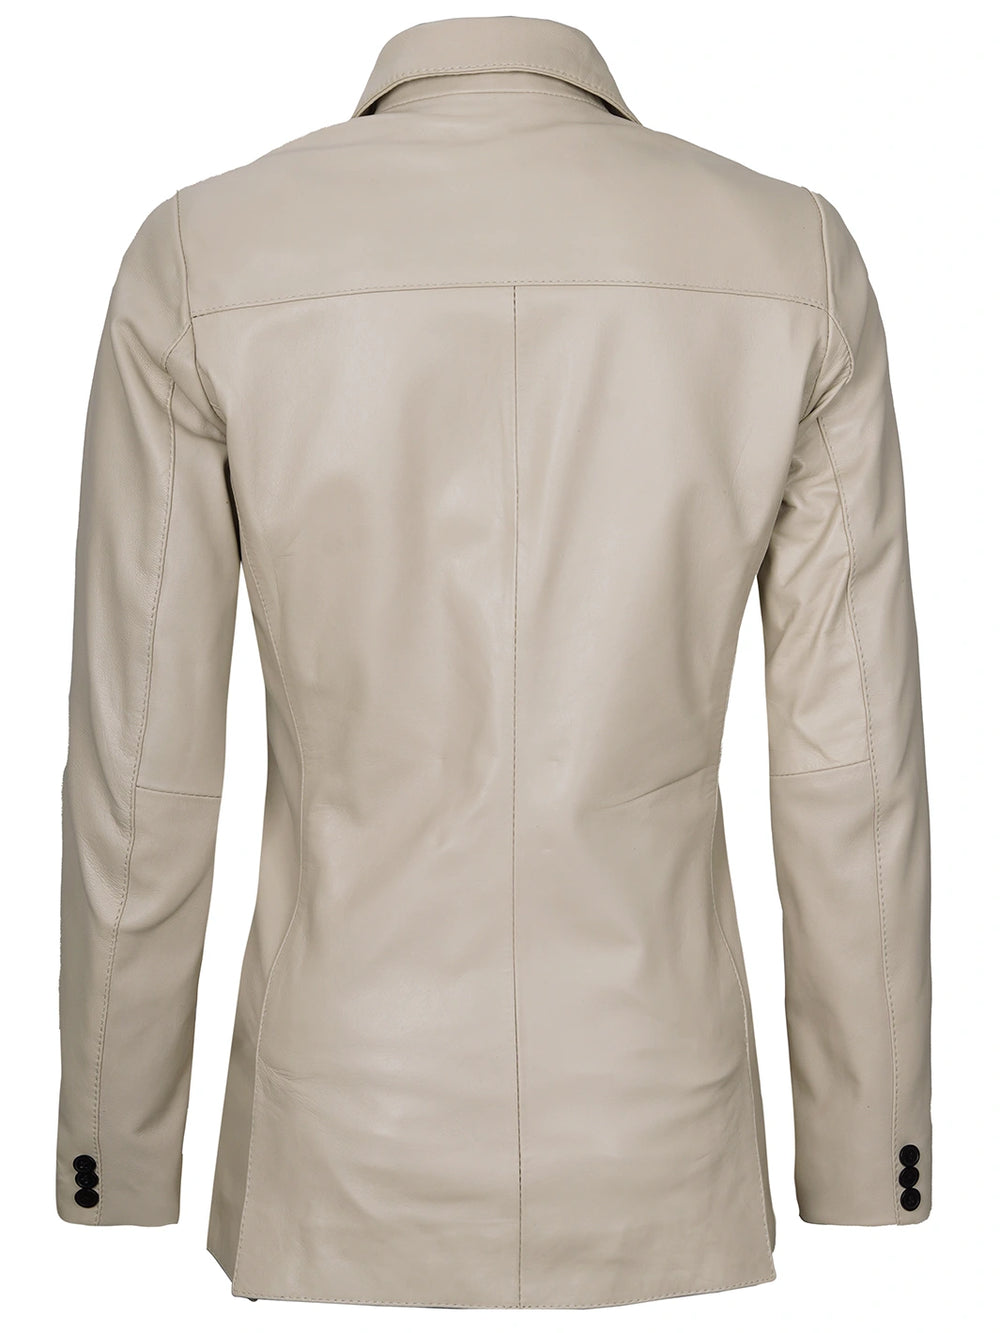 beige leather blazer for women